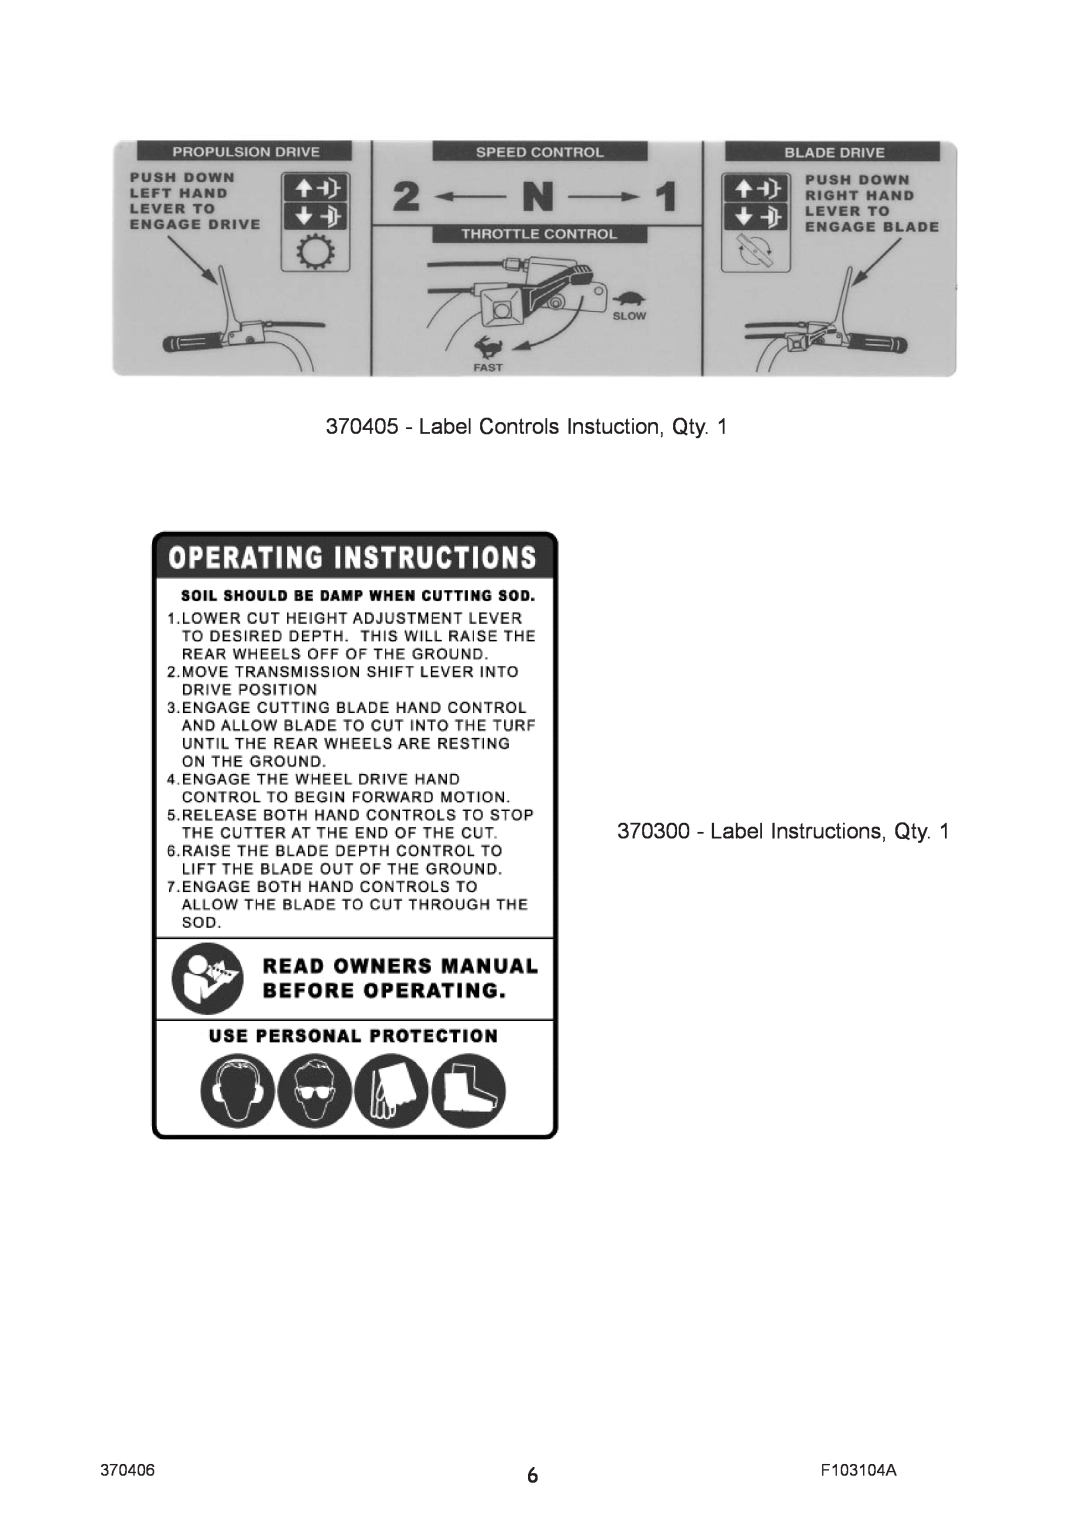 Billy Goat SC121H manual Label Controls Instuction, Qty, Label Instructions, Qty, 370406, F103104A 